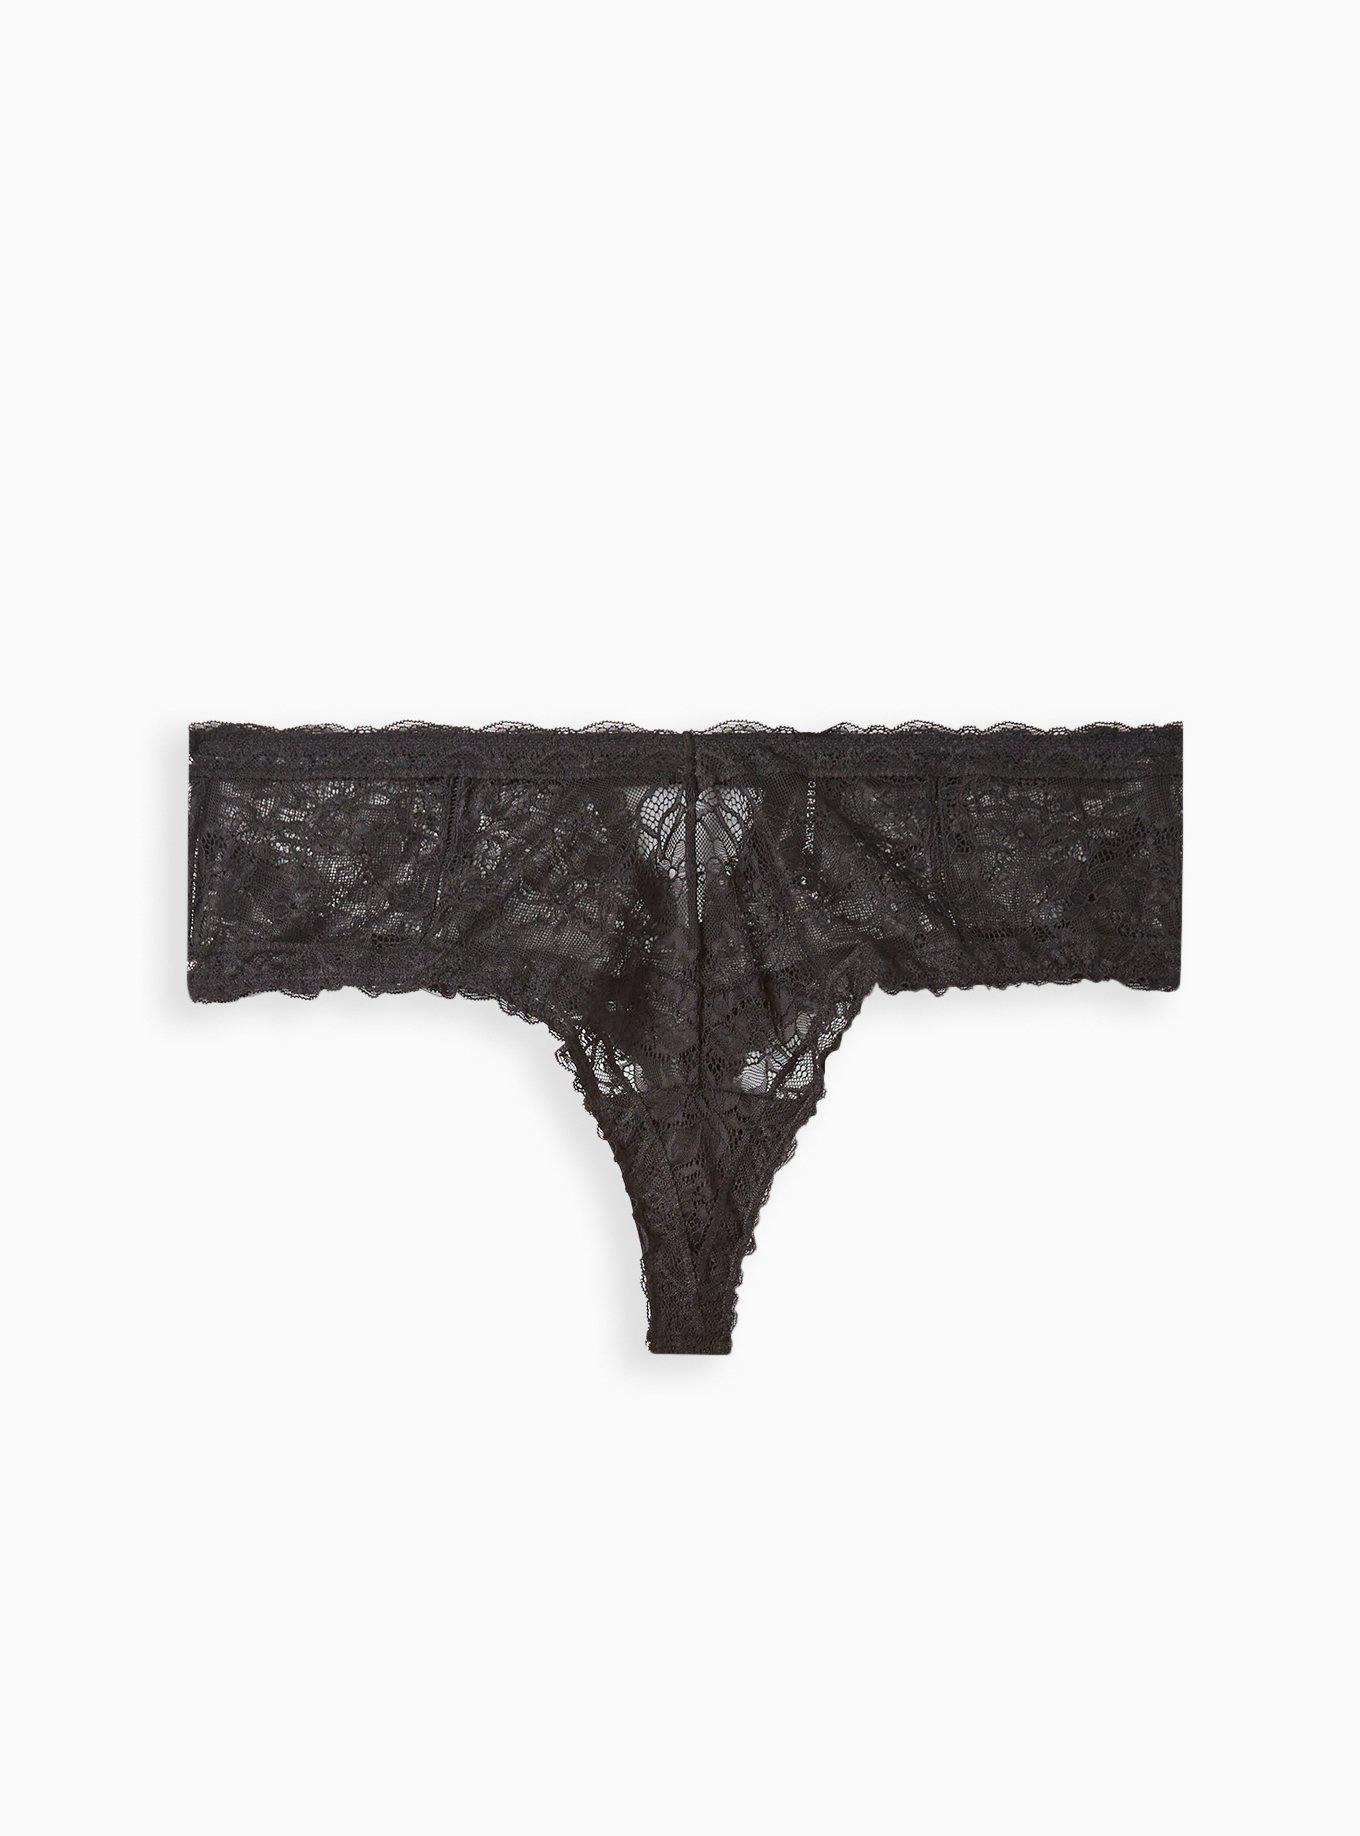 Plus Size - High Waist Cut Out Thong Panty - Lace Black - Torrid